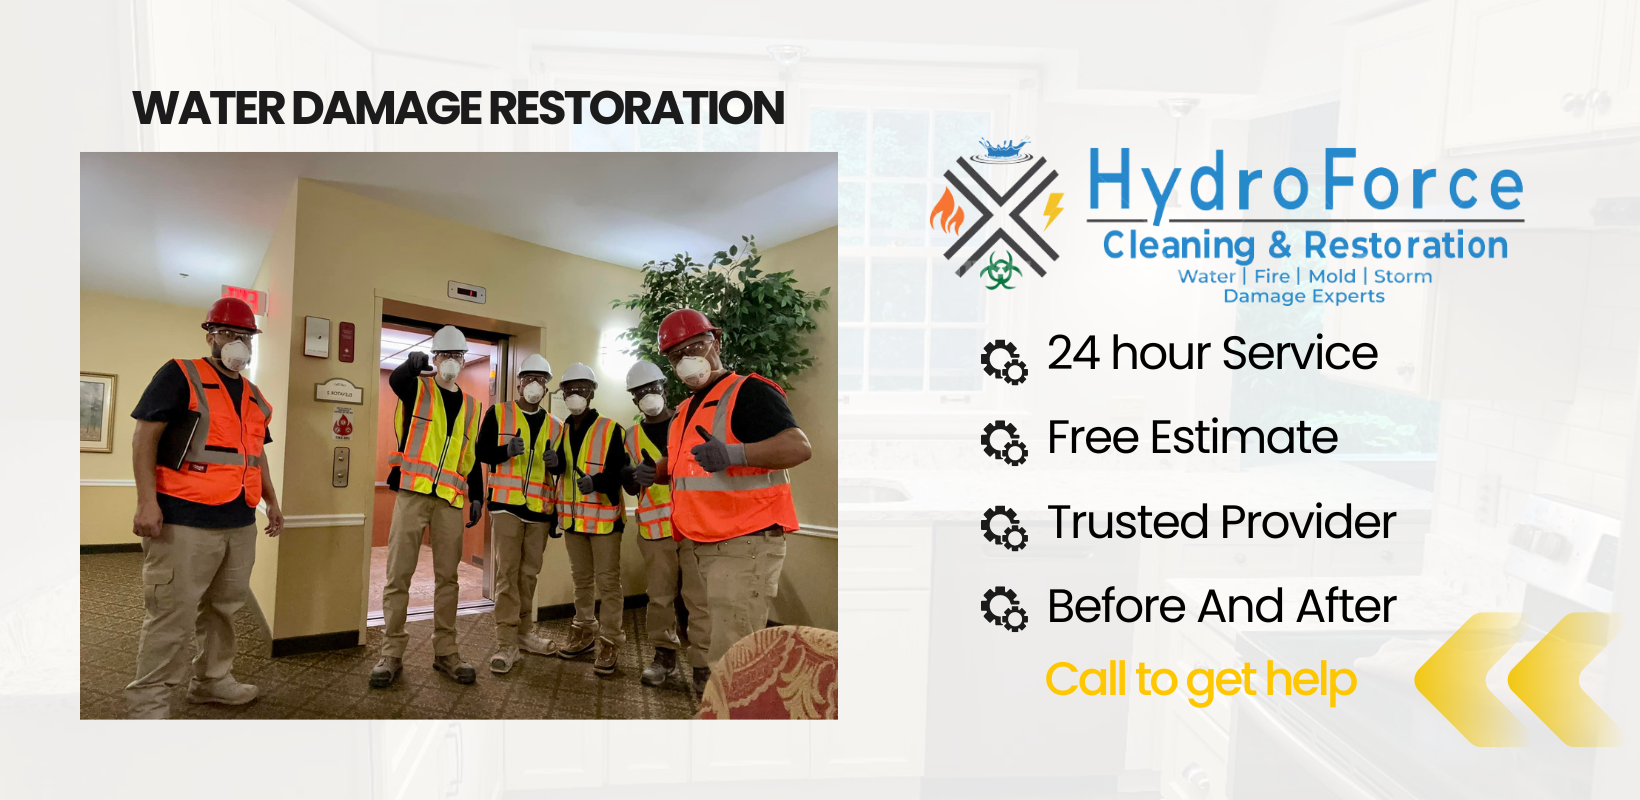 Water Damage Restoration - HydroForce Cleaning & Restoration